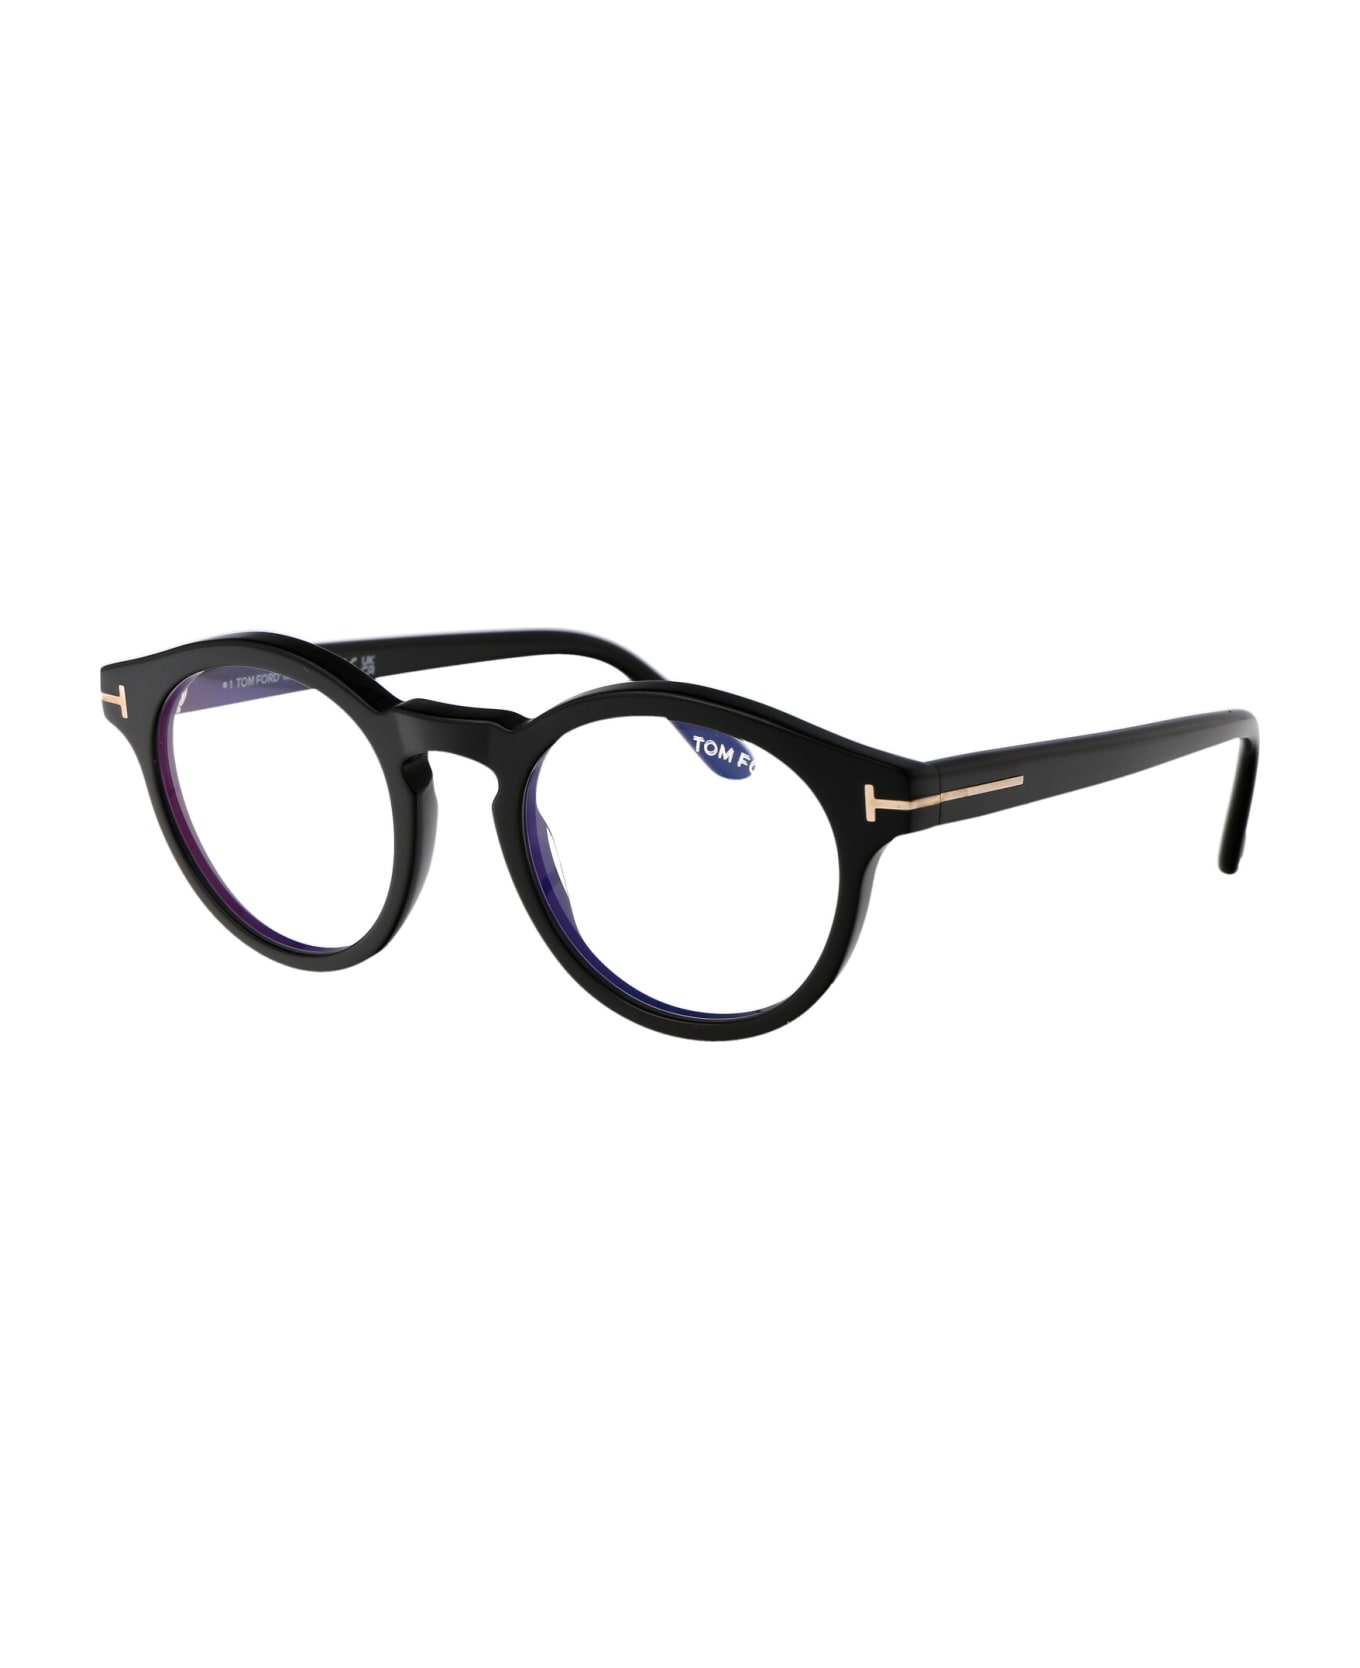 Tom Ford Eyewear Ft5887-b Glasses - 001 Nero Lucido